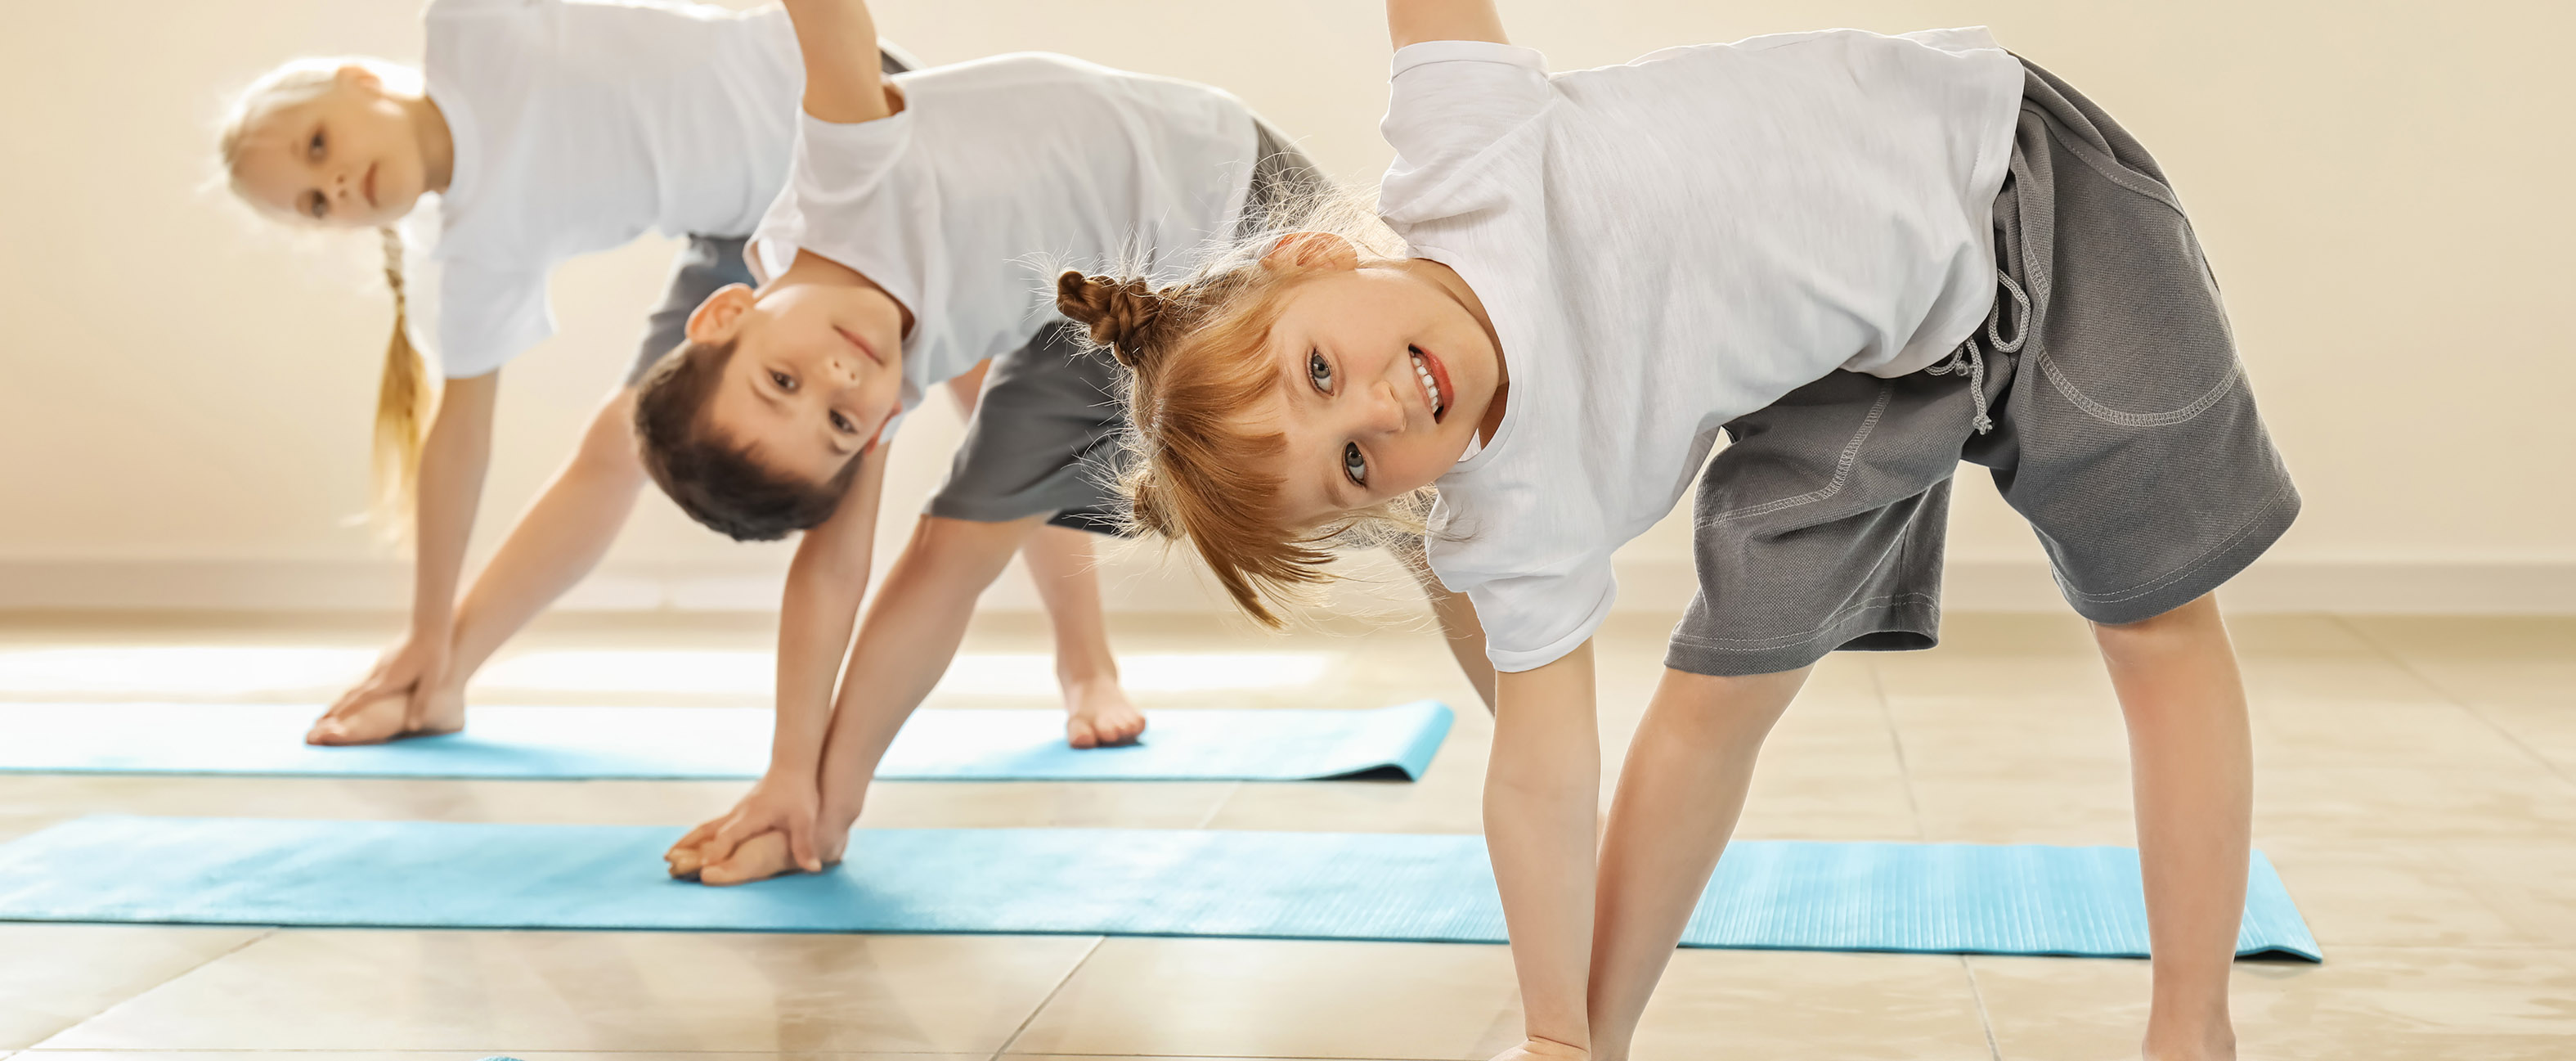 Atelier yoga enfant – Yog’harmonie en famille